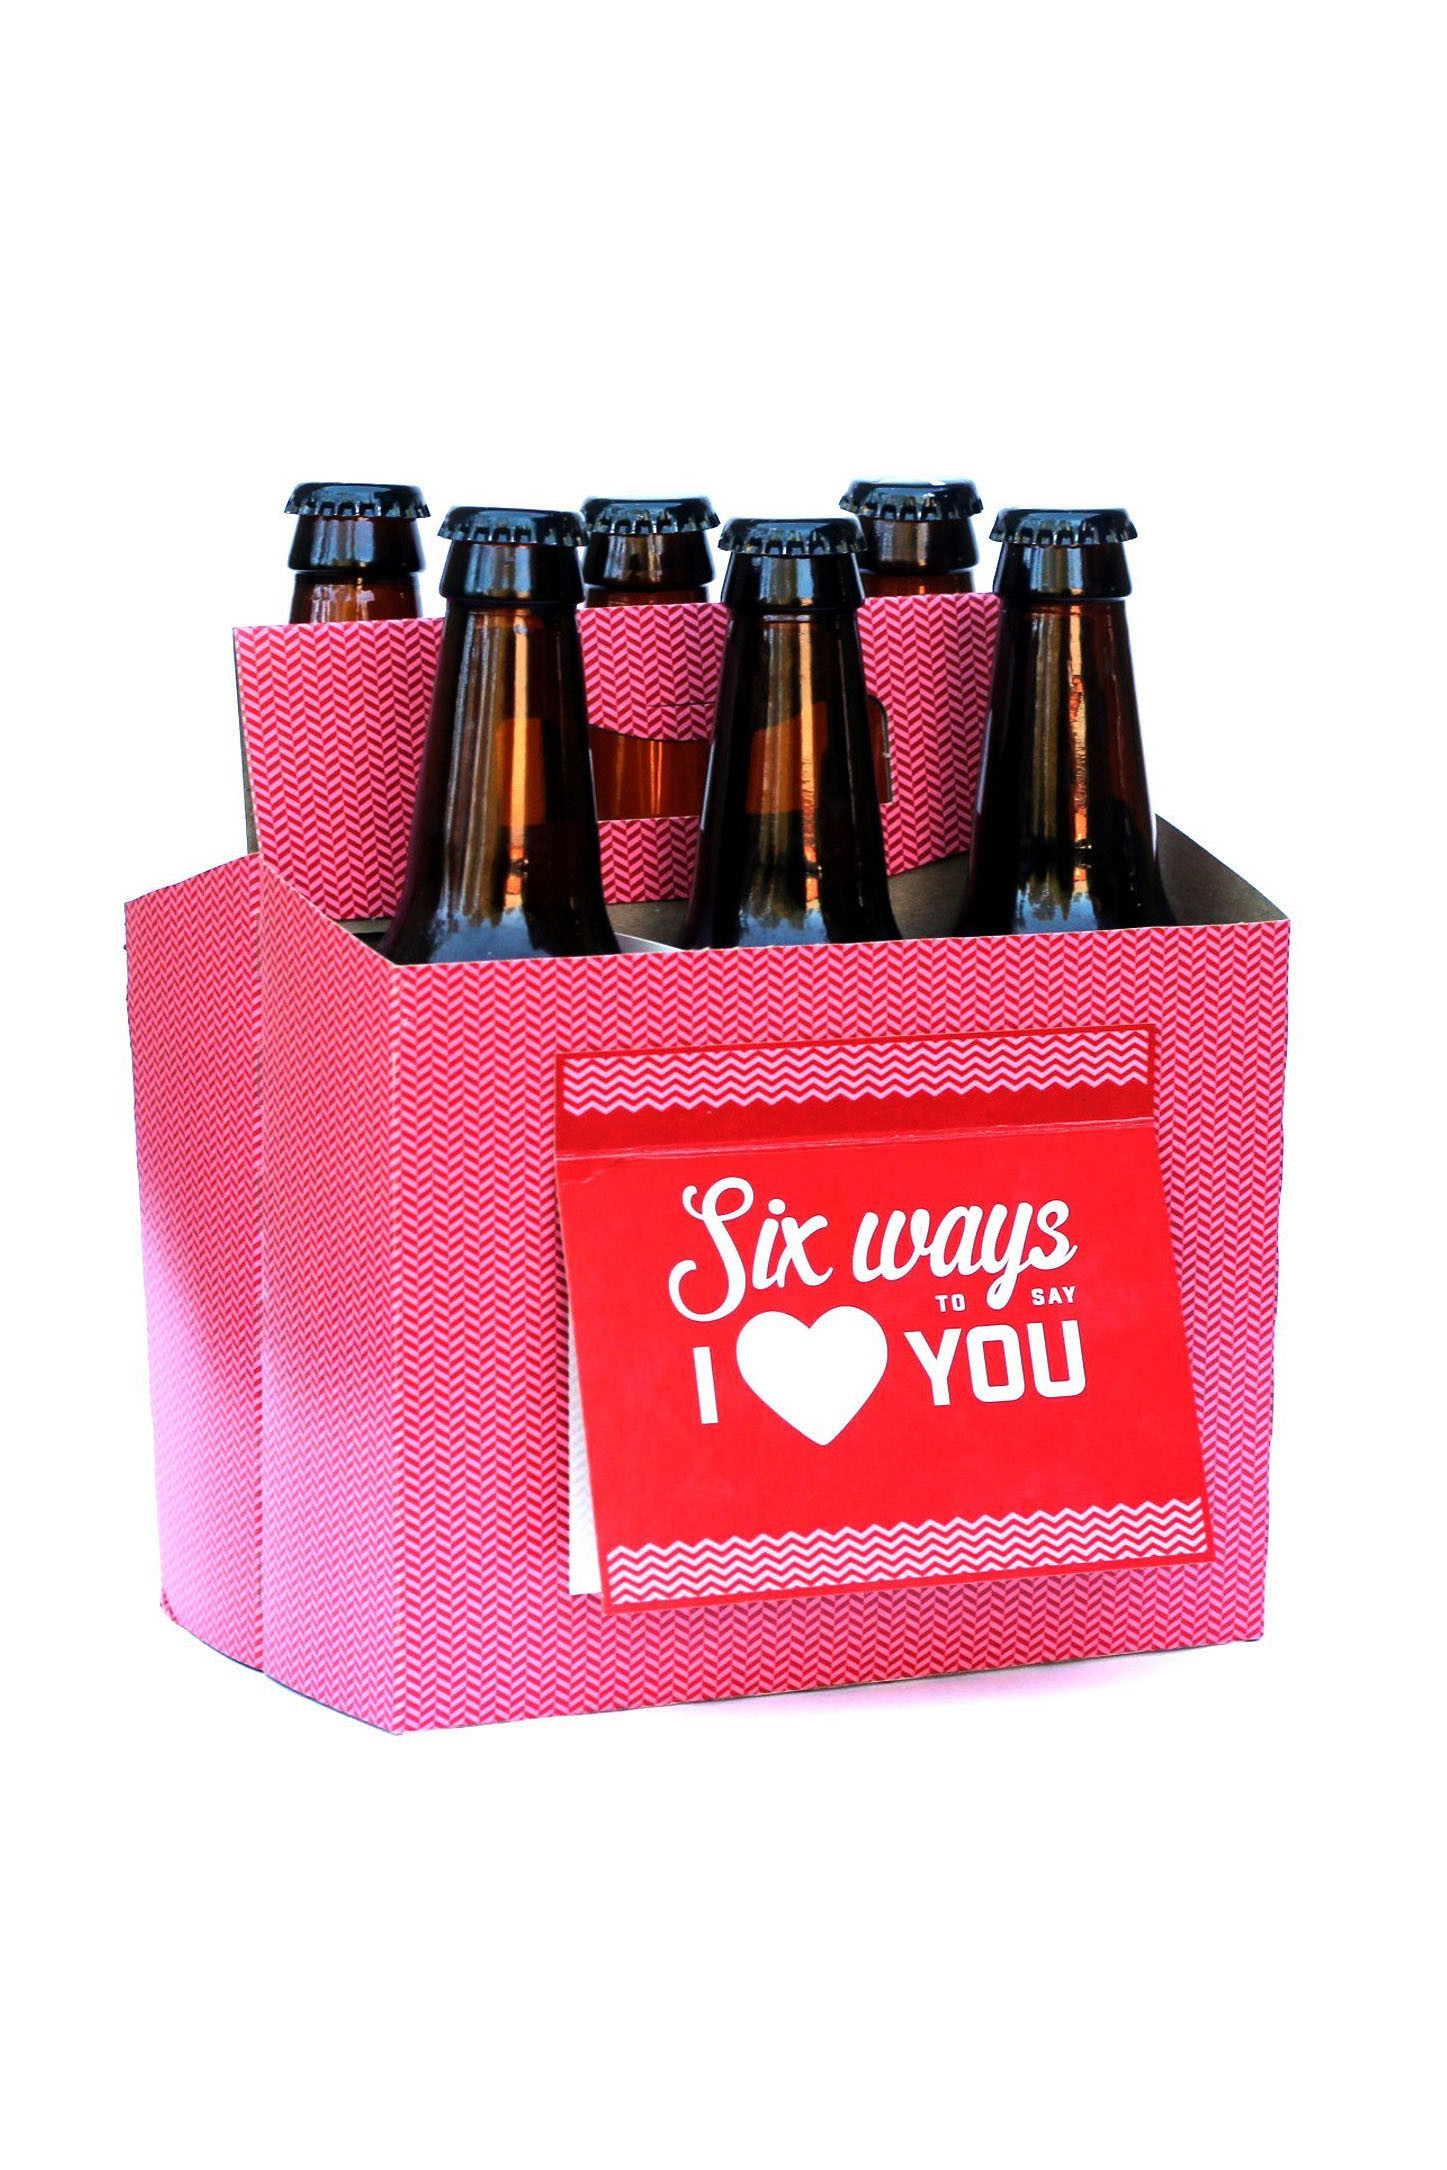 Valentine Gift Ideas For New Boyfriend
 Beer Gift Ideas For Him